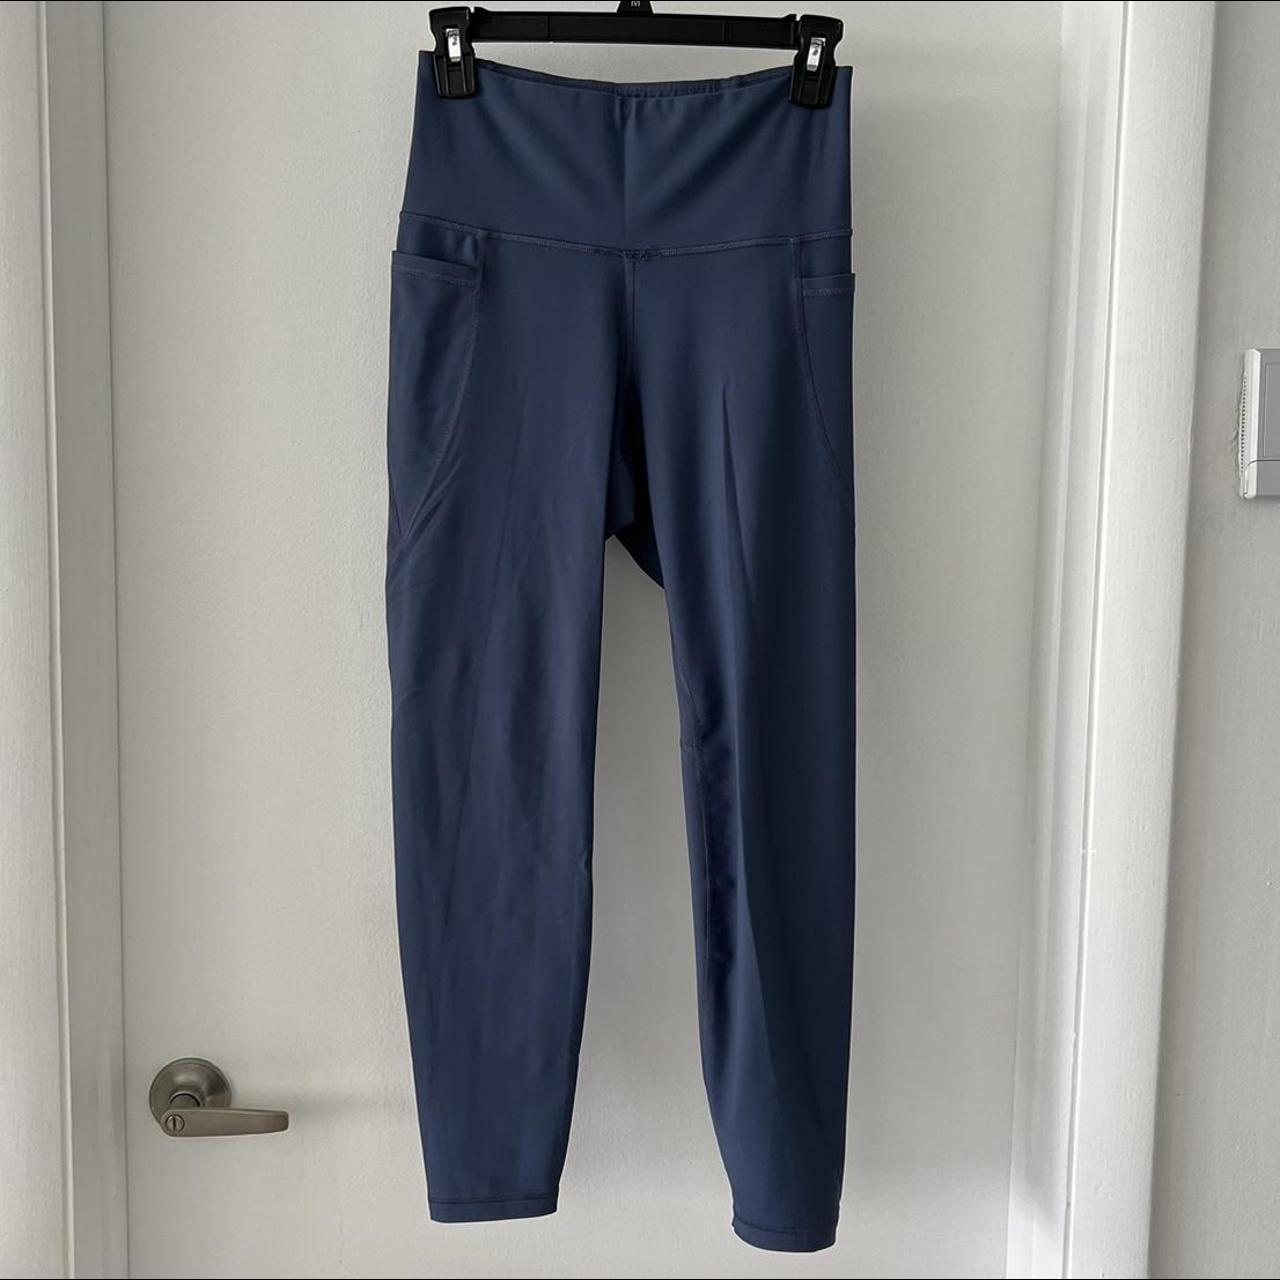 ATHLETA navy blue leggings with pockets on the - Depop